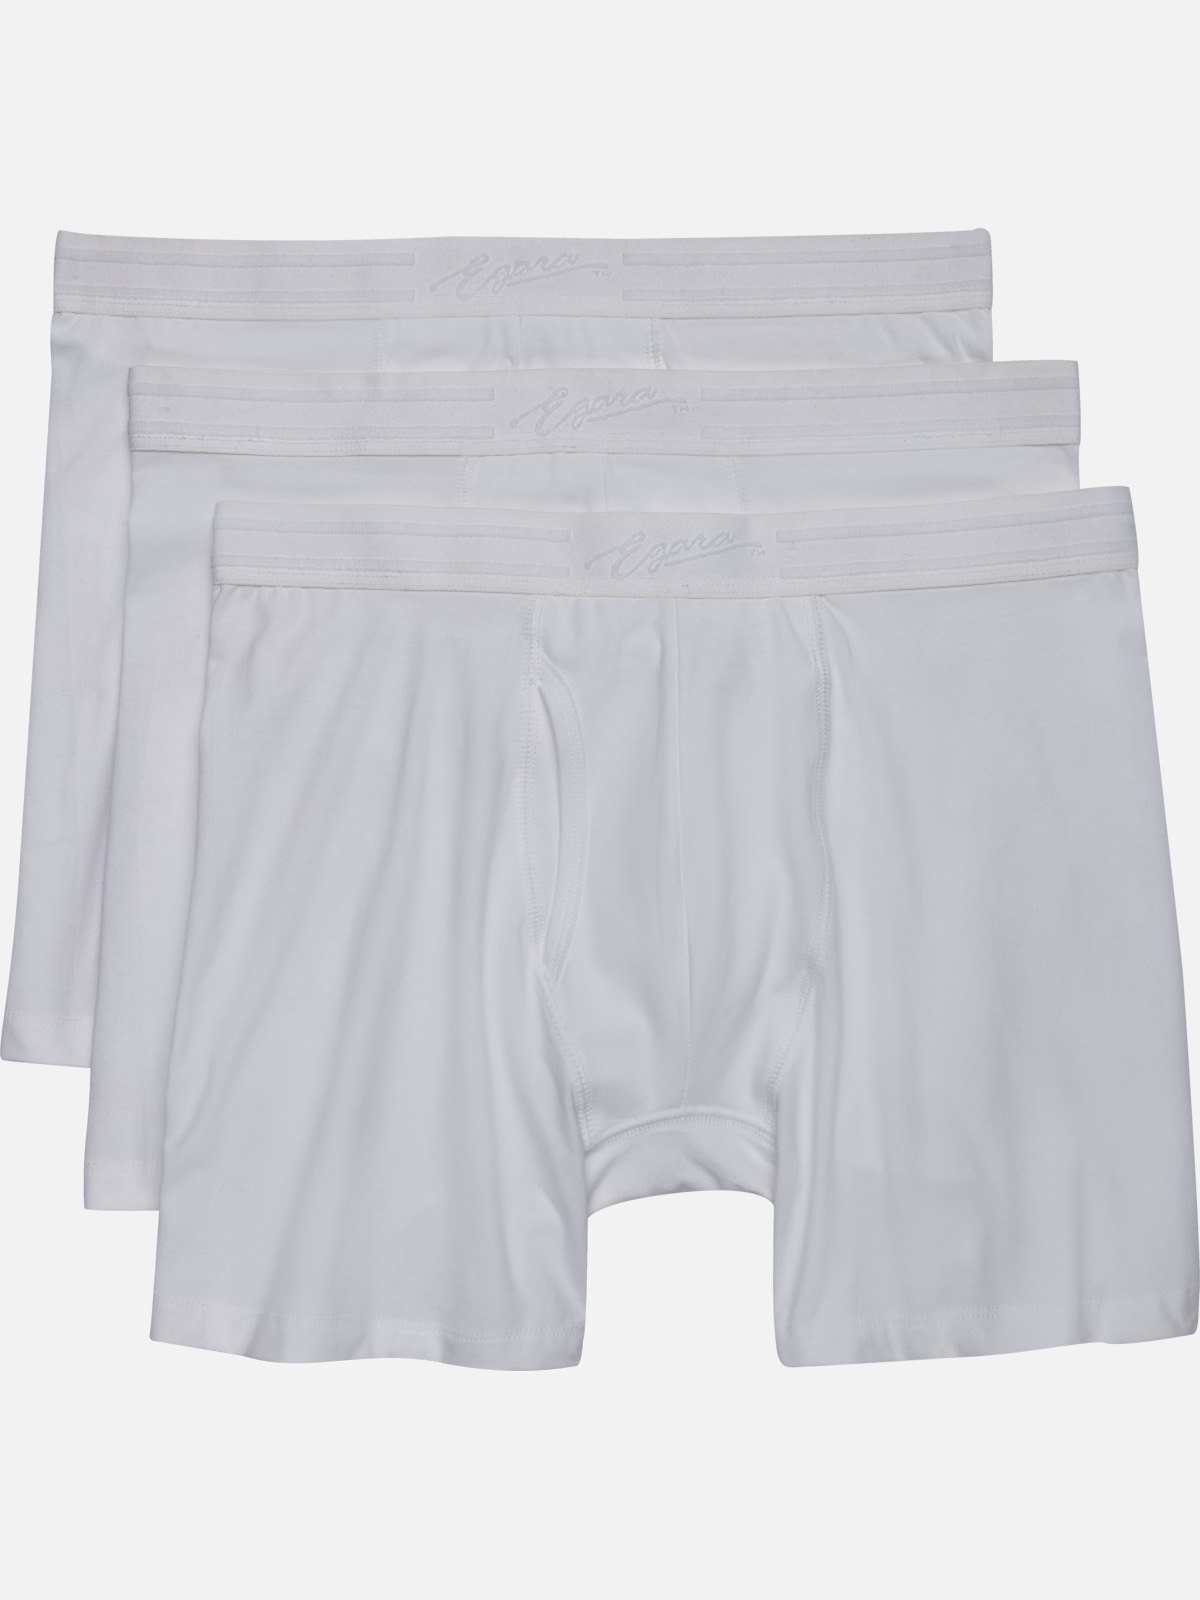 eywlwaar Men's Breathable Boxer Briefs Pouch Mesh Trunks Underwear at   Men's Clothing store